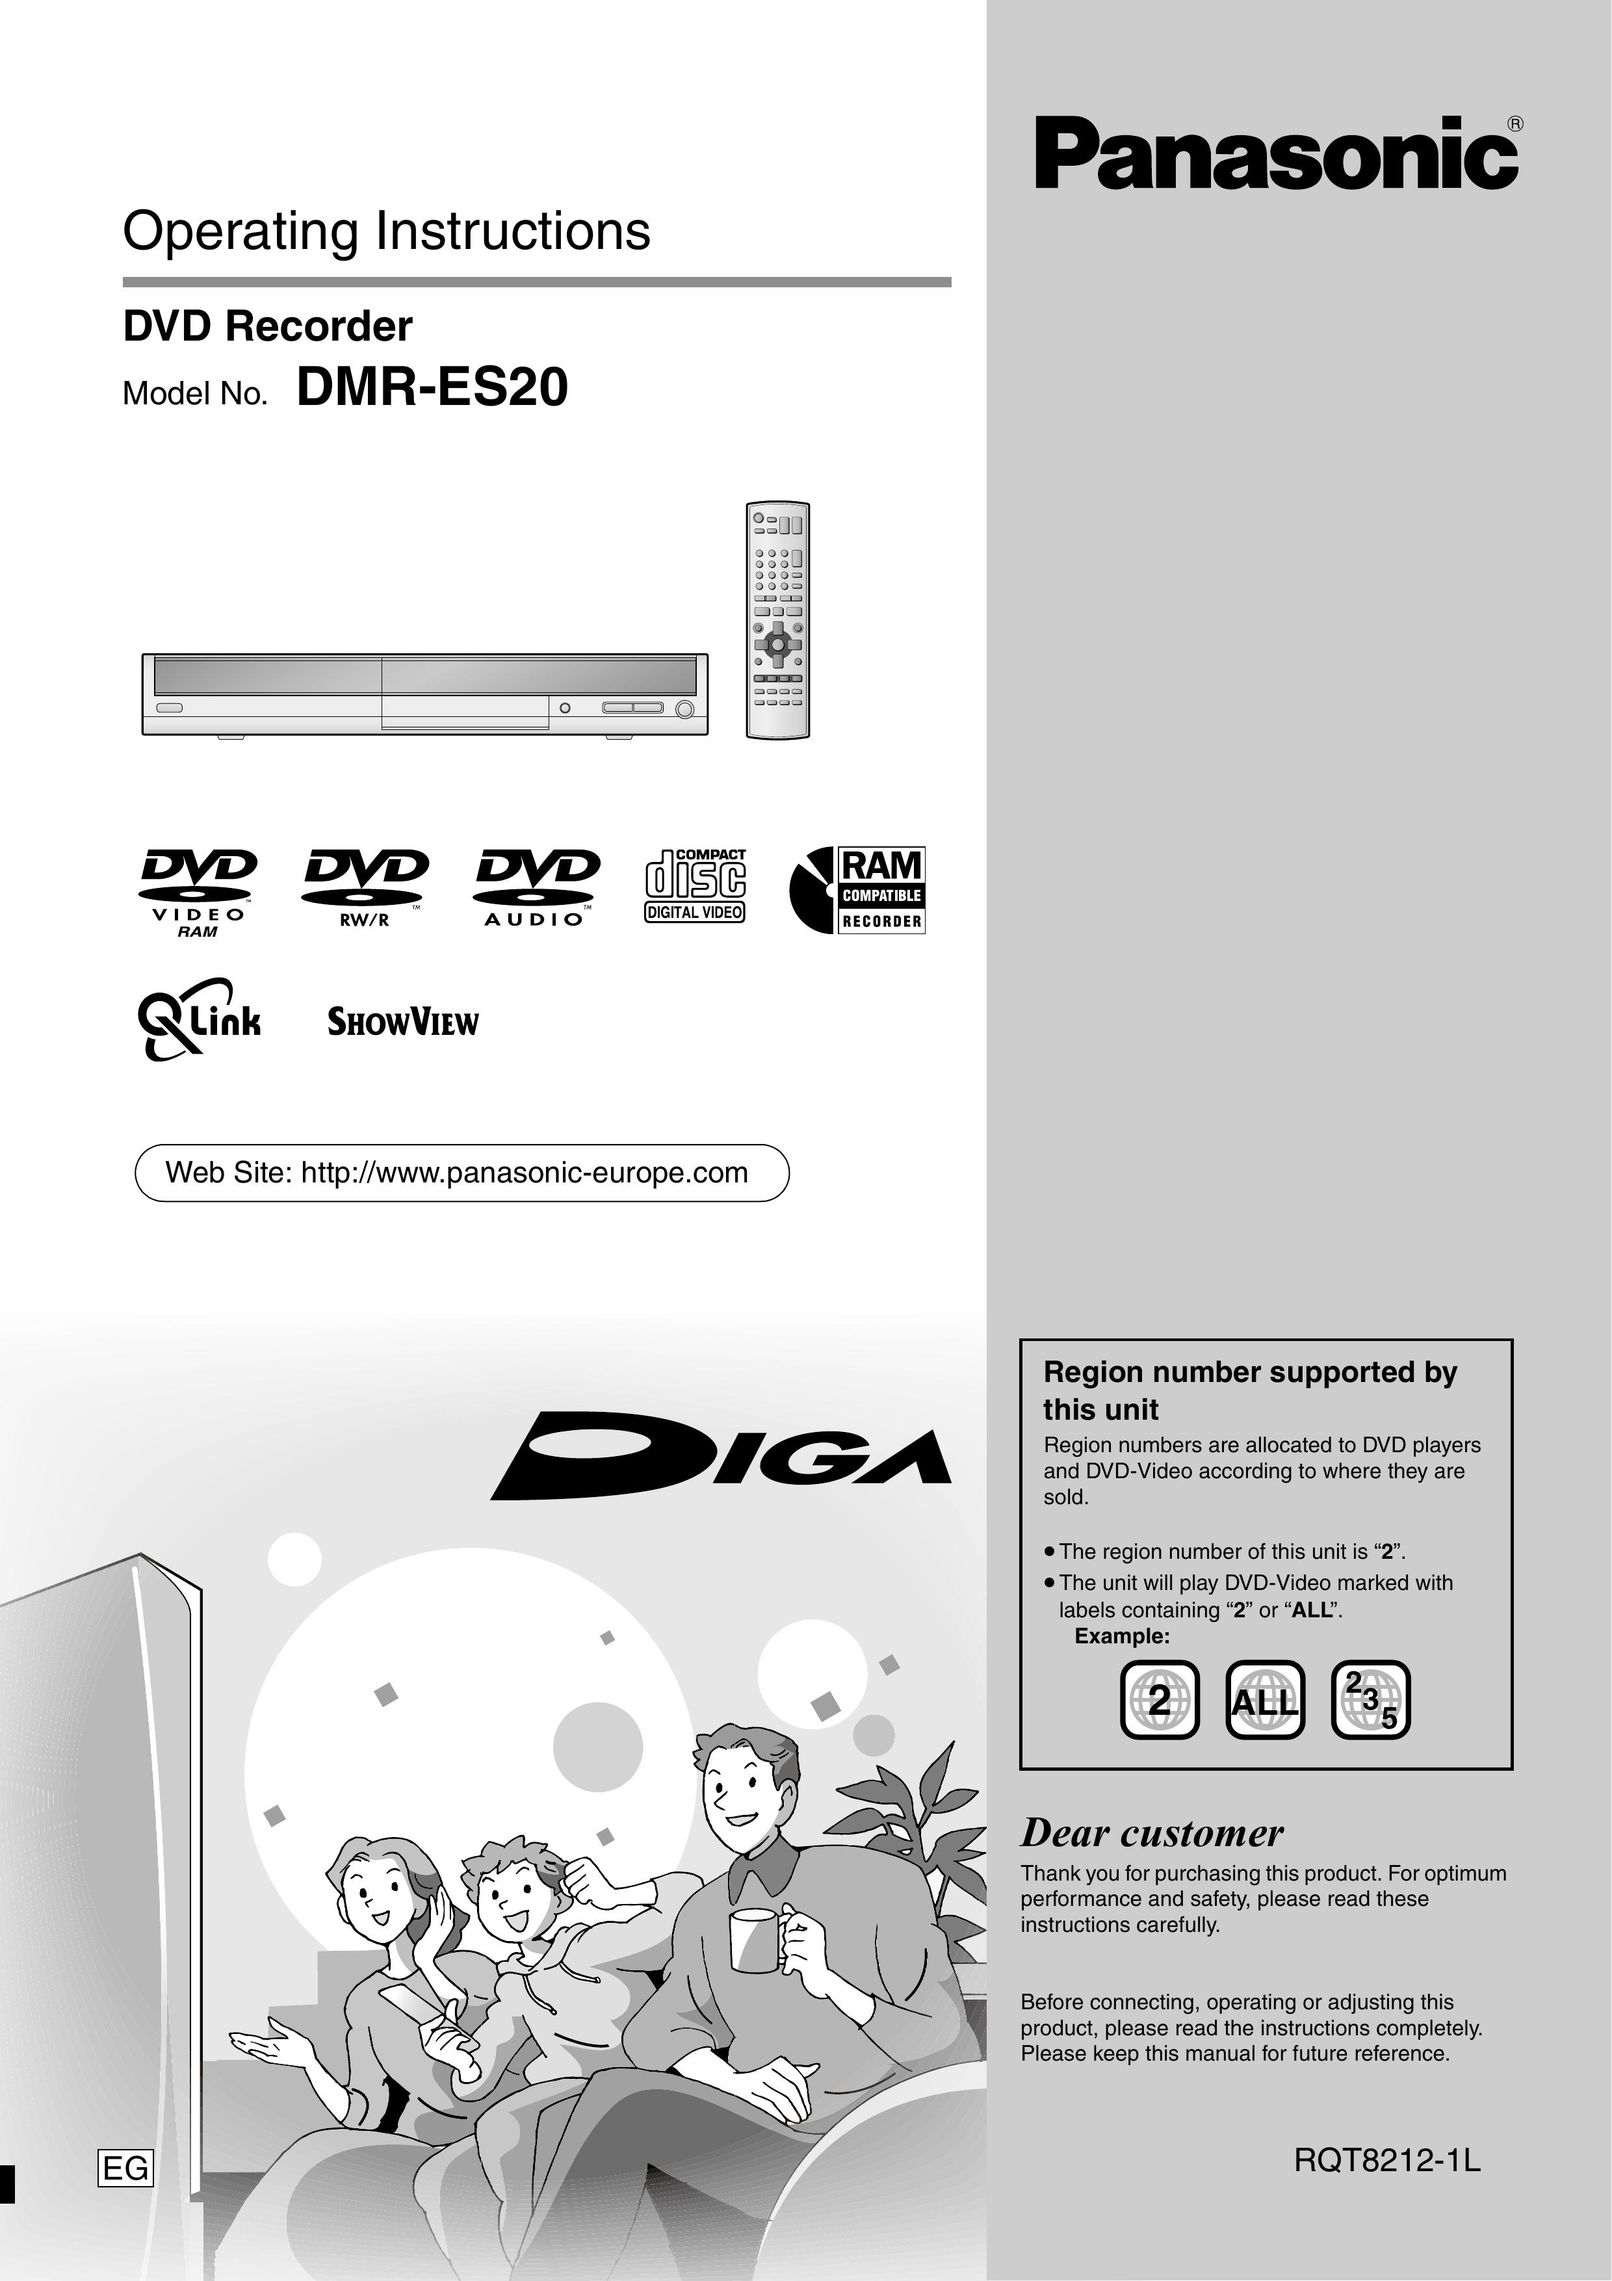 Panasonic DMR-ES20 DVR User Manual